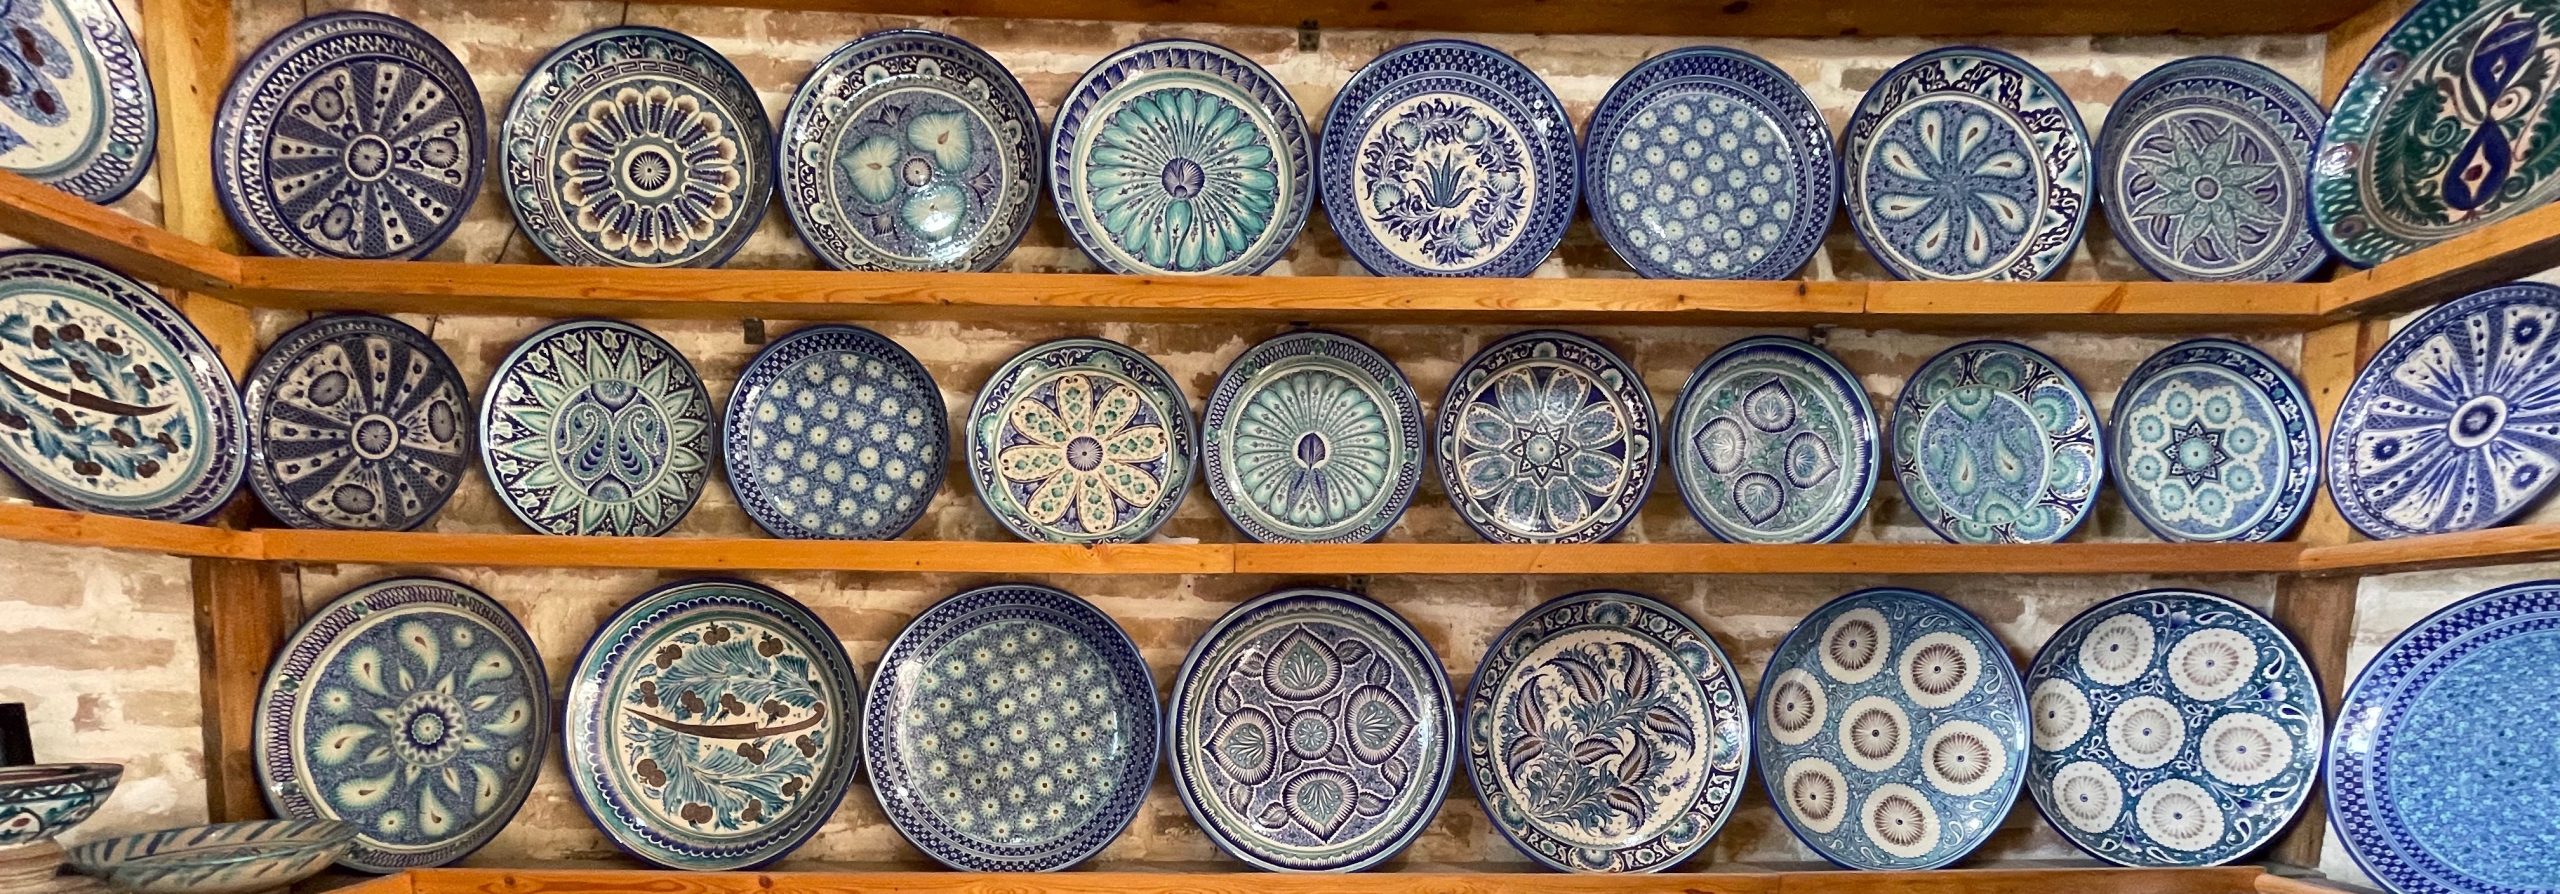 Uzbek ceramics on display in Bukhara. Photo credit: Abdu Samadov